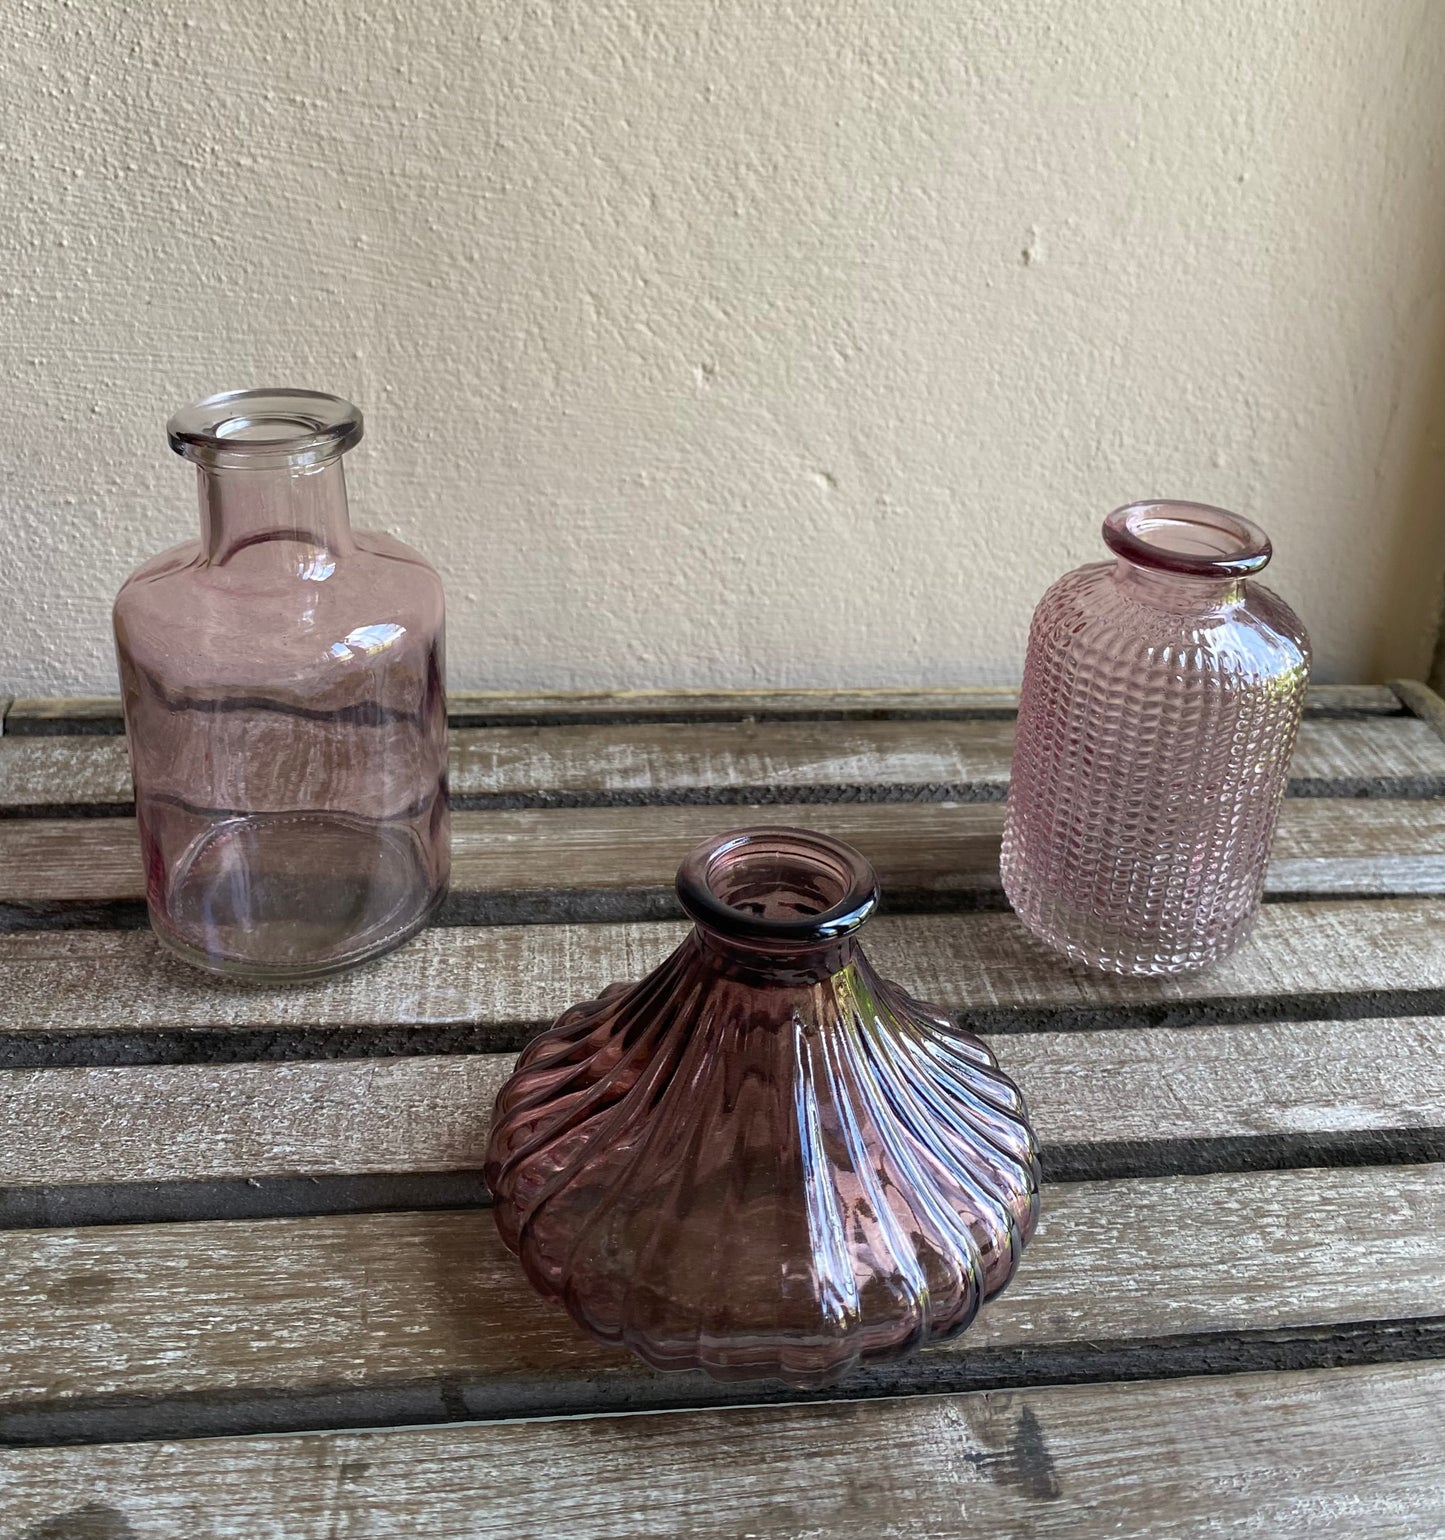 Trio Of Pretty Pink Posies - Including a seasonal posy in each vase